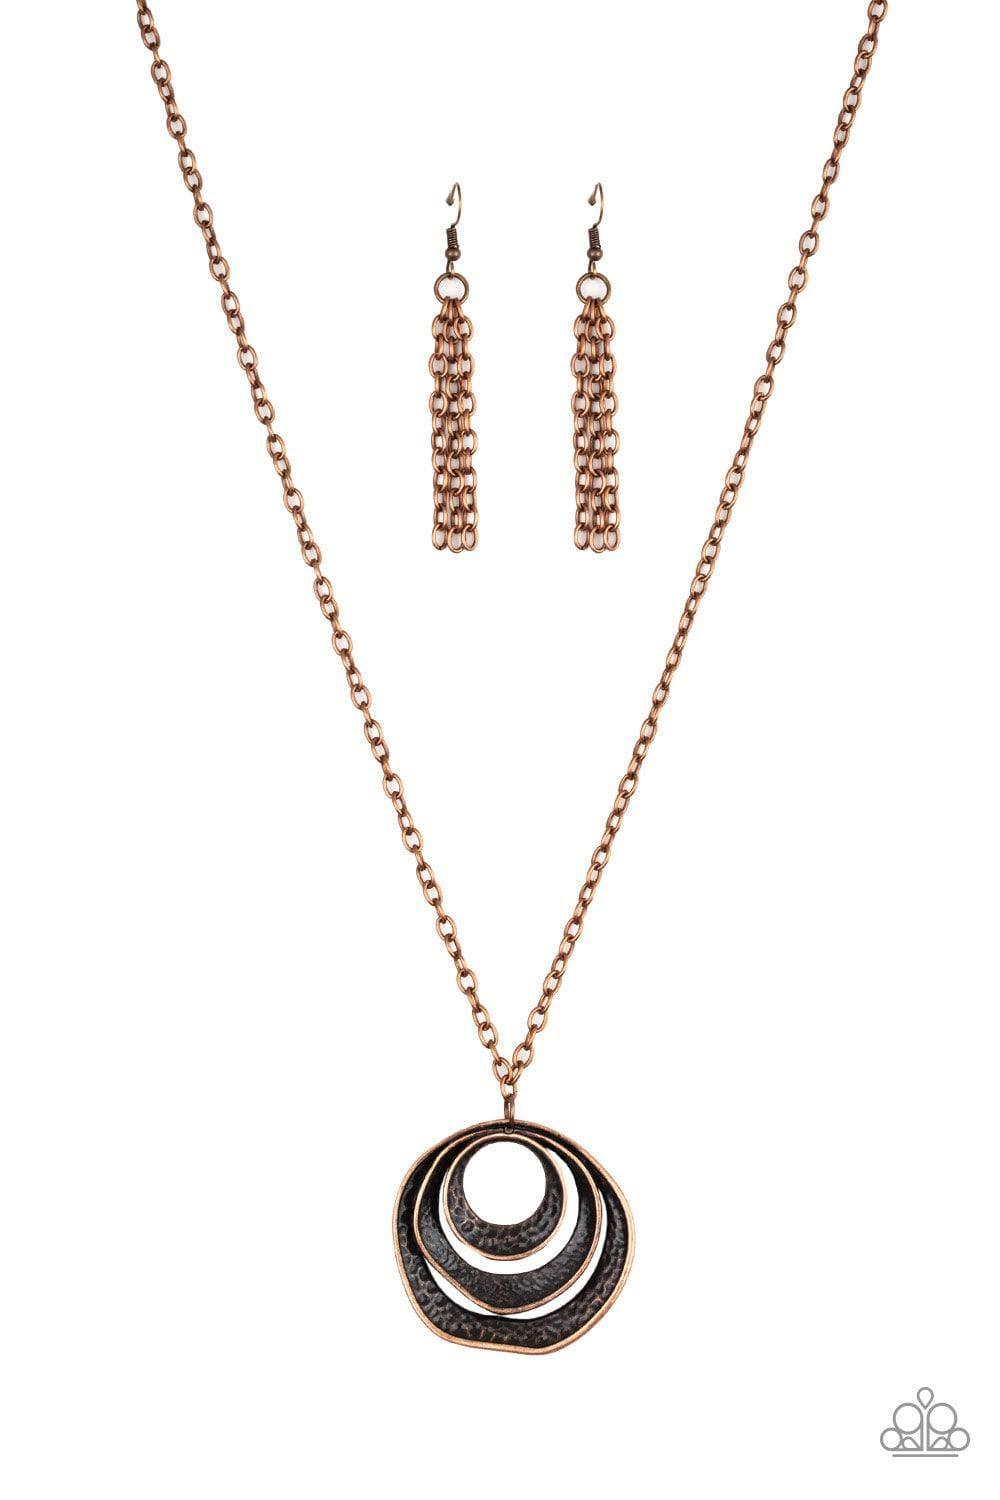 Paparazzi Accessories - Breaking Pattern - Copper Necklace - Bling by JessieK